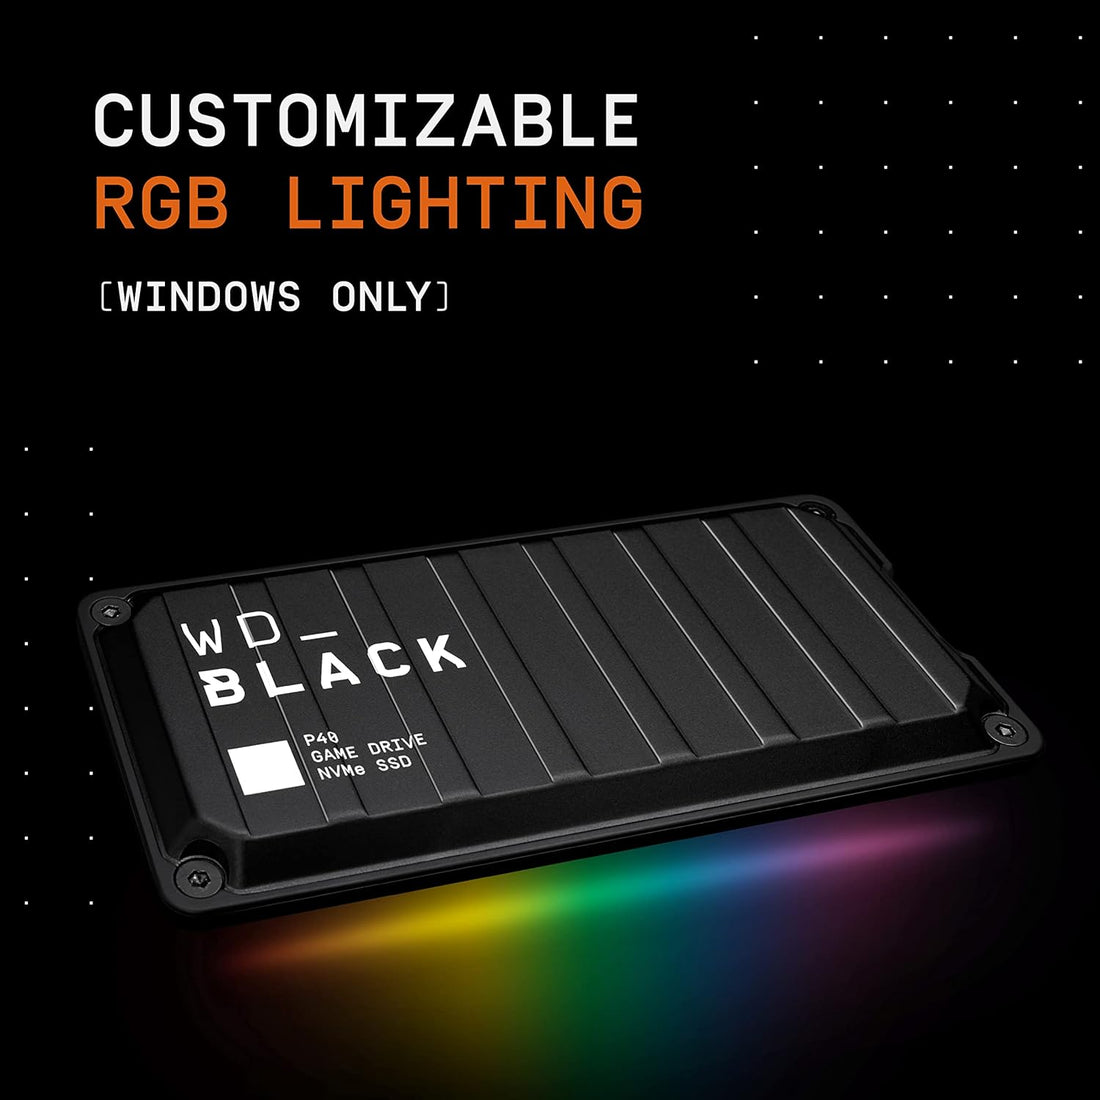 WD_Black P40 Game Drive 500GB, 2000MB/s R, 2000MB/s W, USB 3.2 Gen2X2, Customisable RGB Lighting for Desktop, Mac, Gaming Console